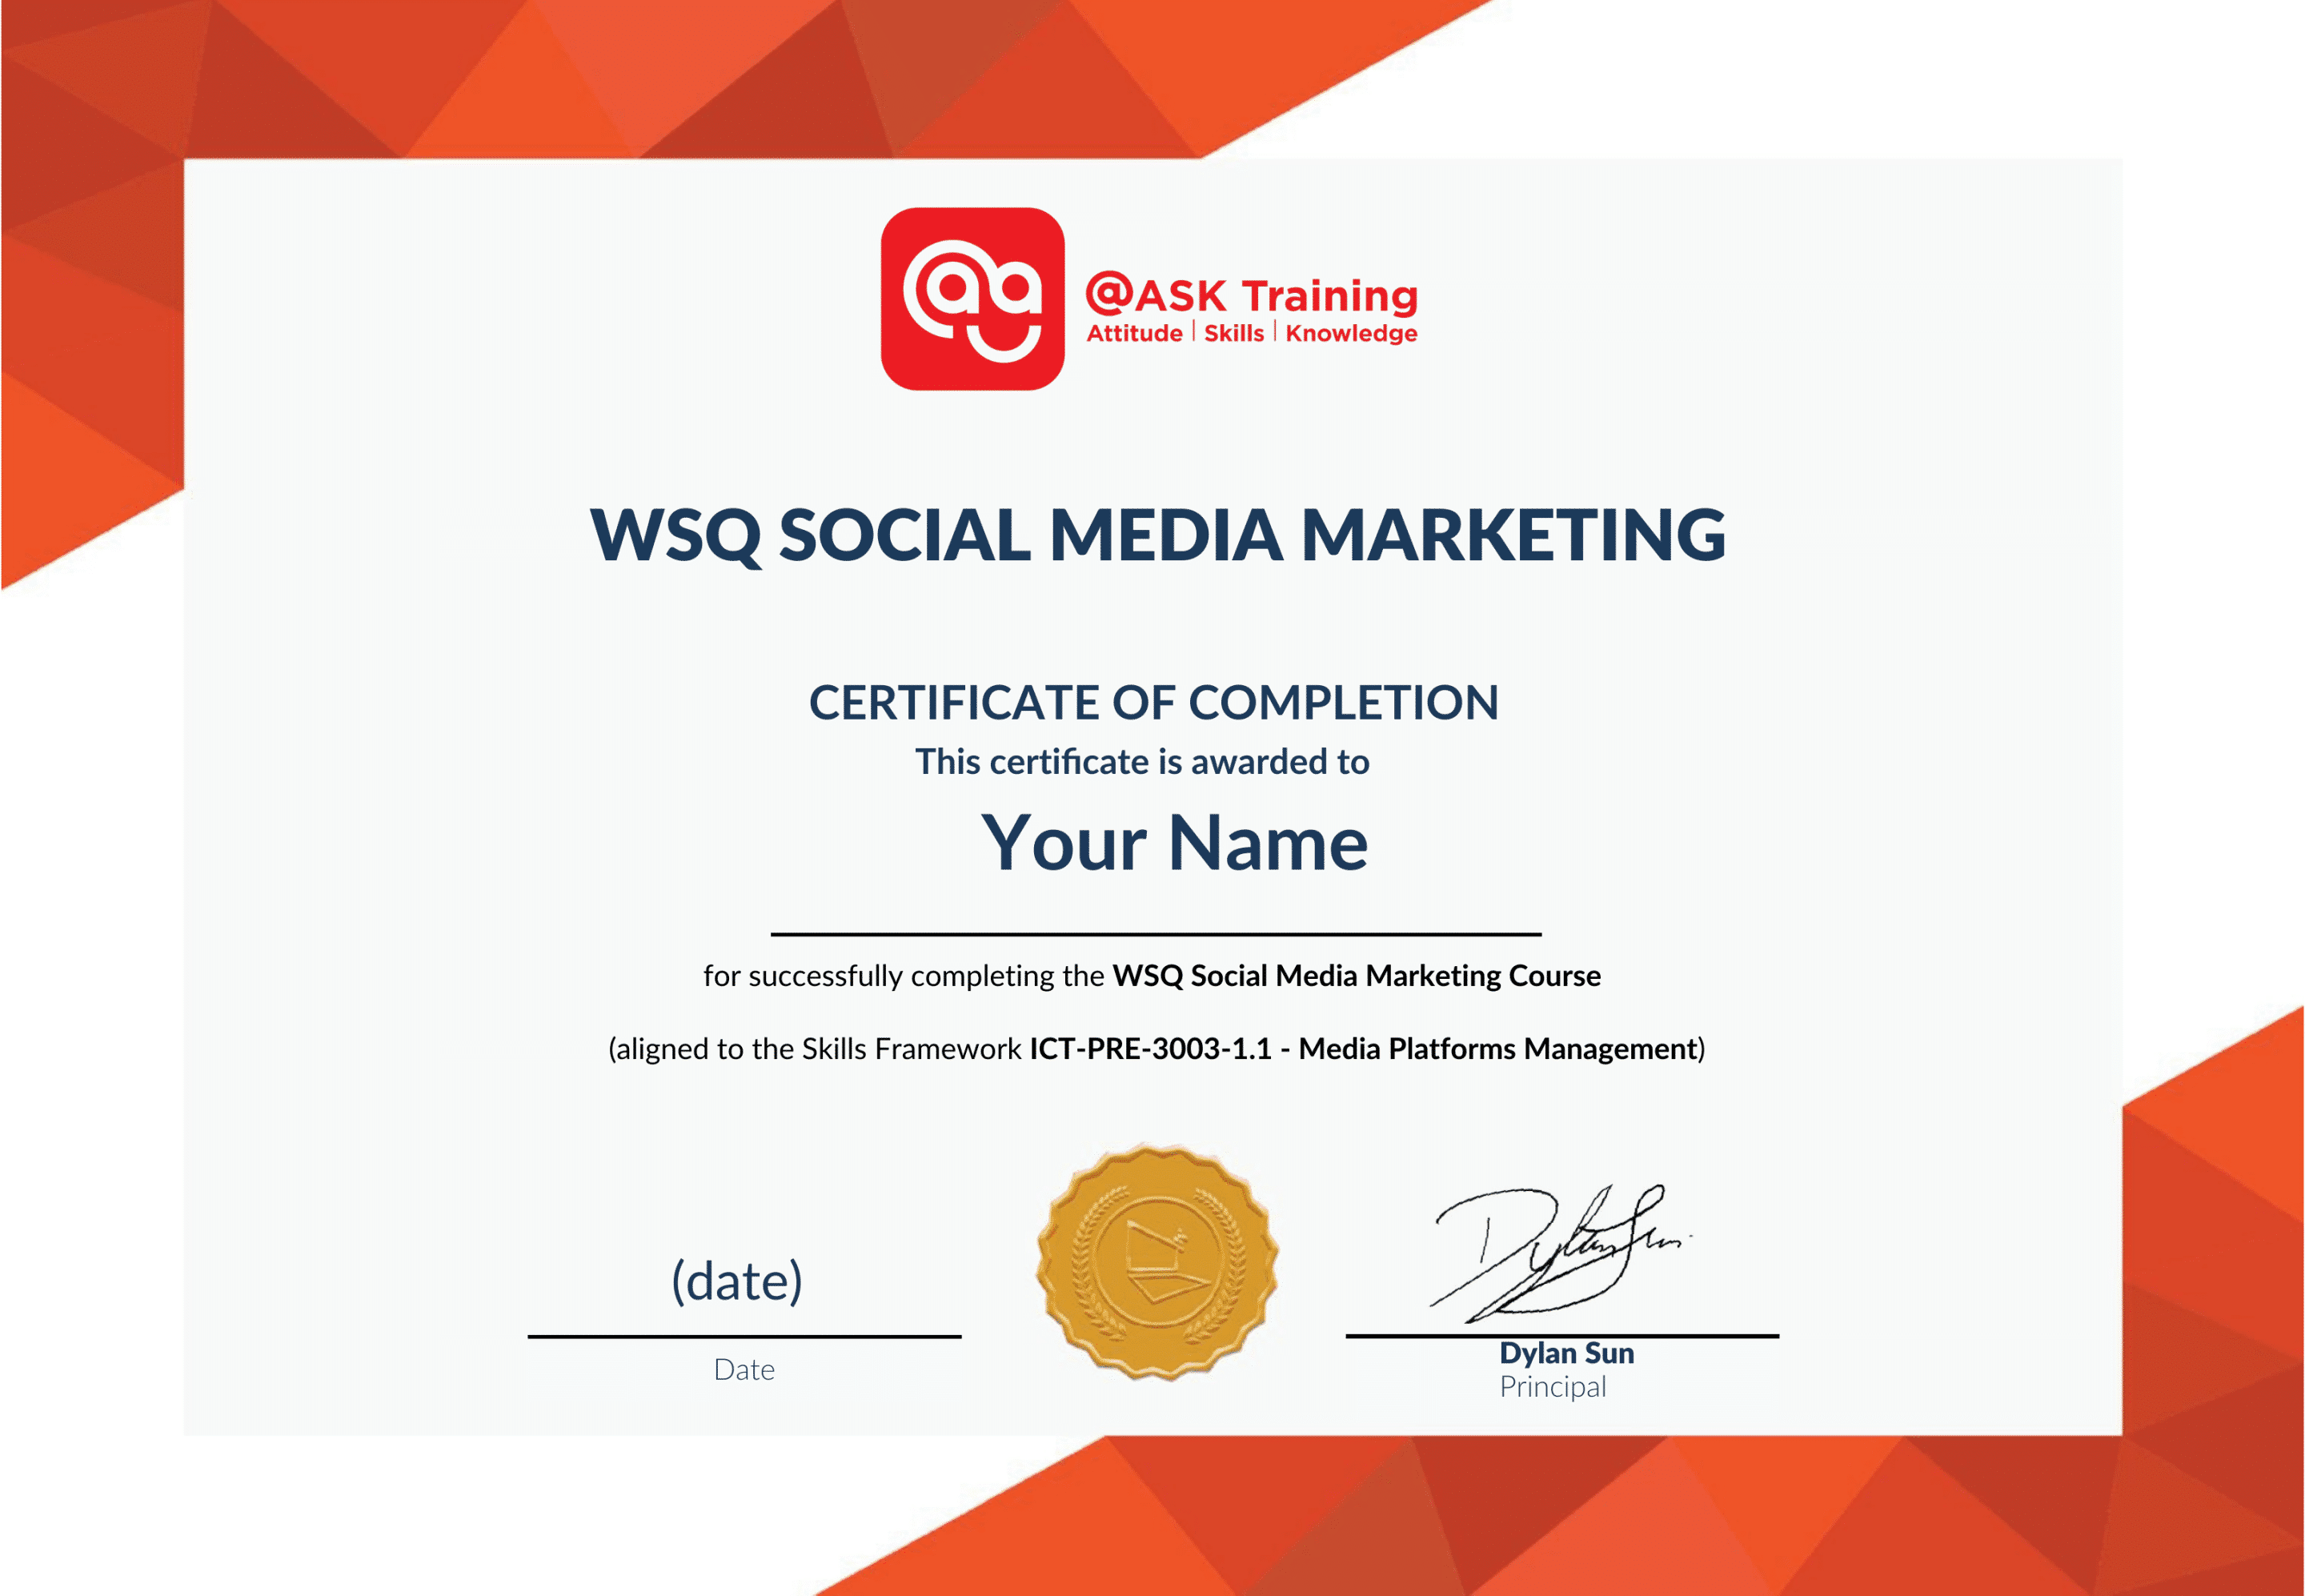 WSQ Social Media Marketing Certificate Sample